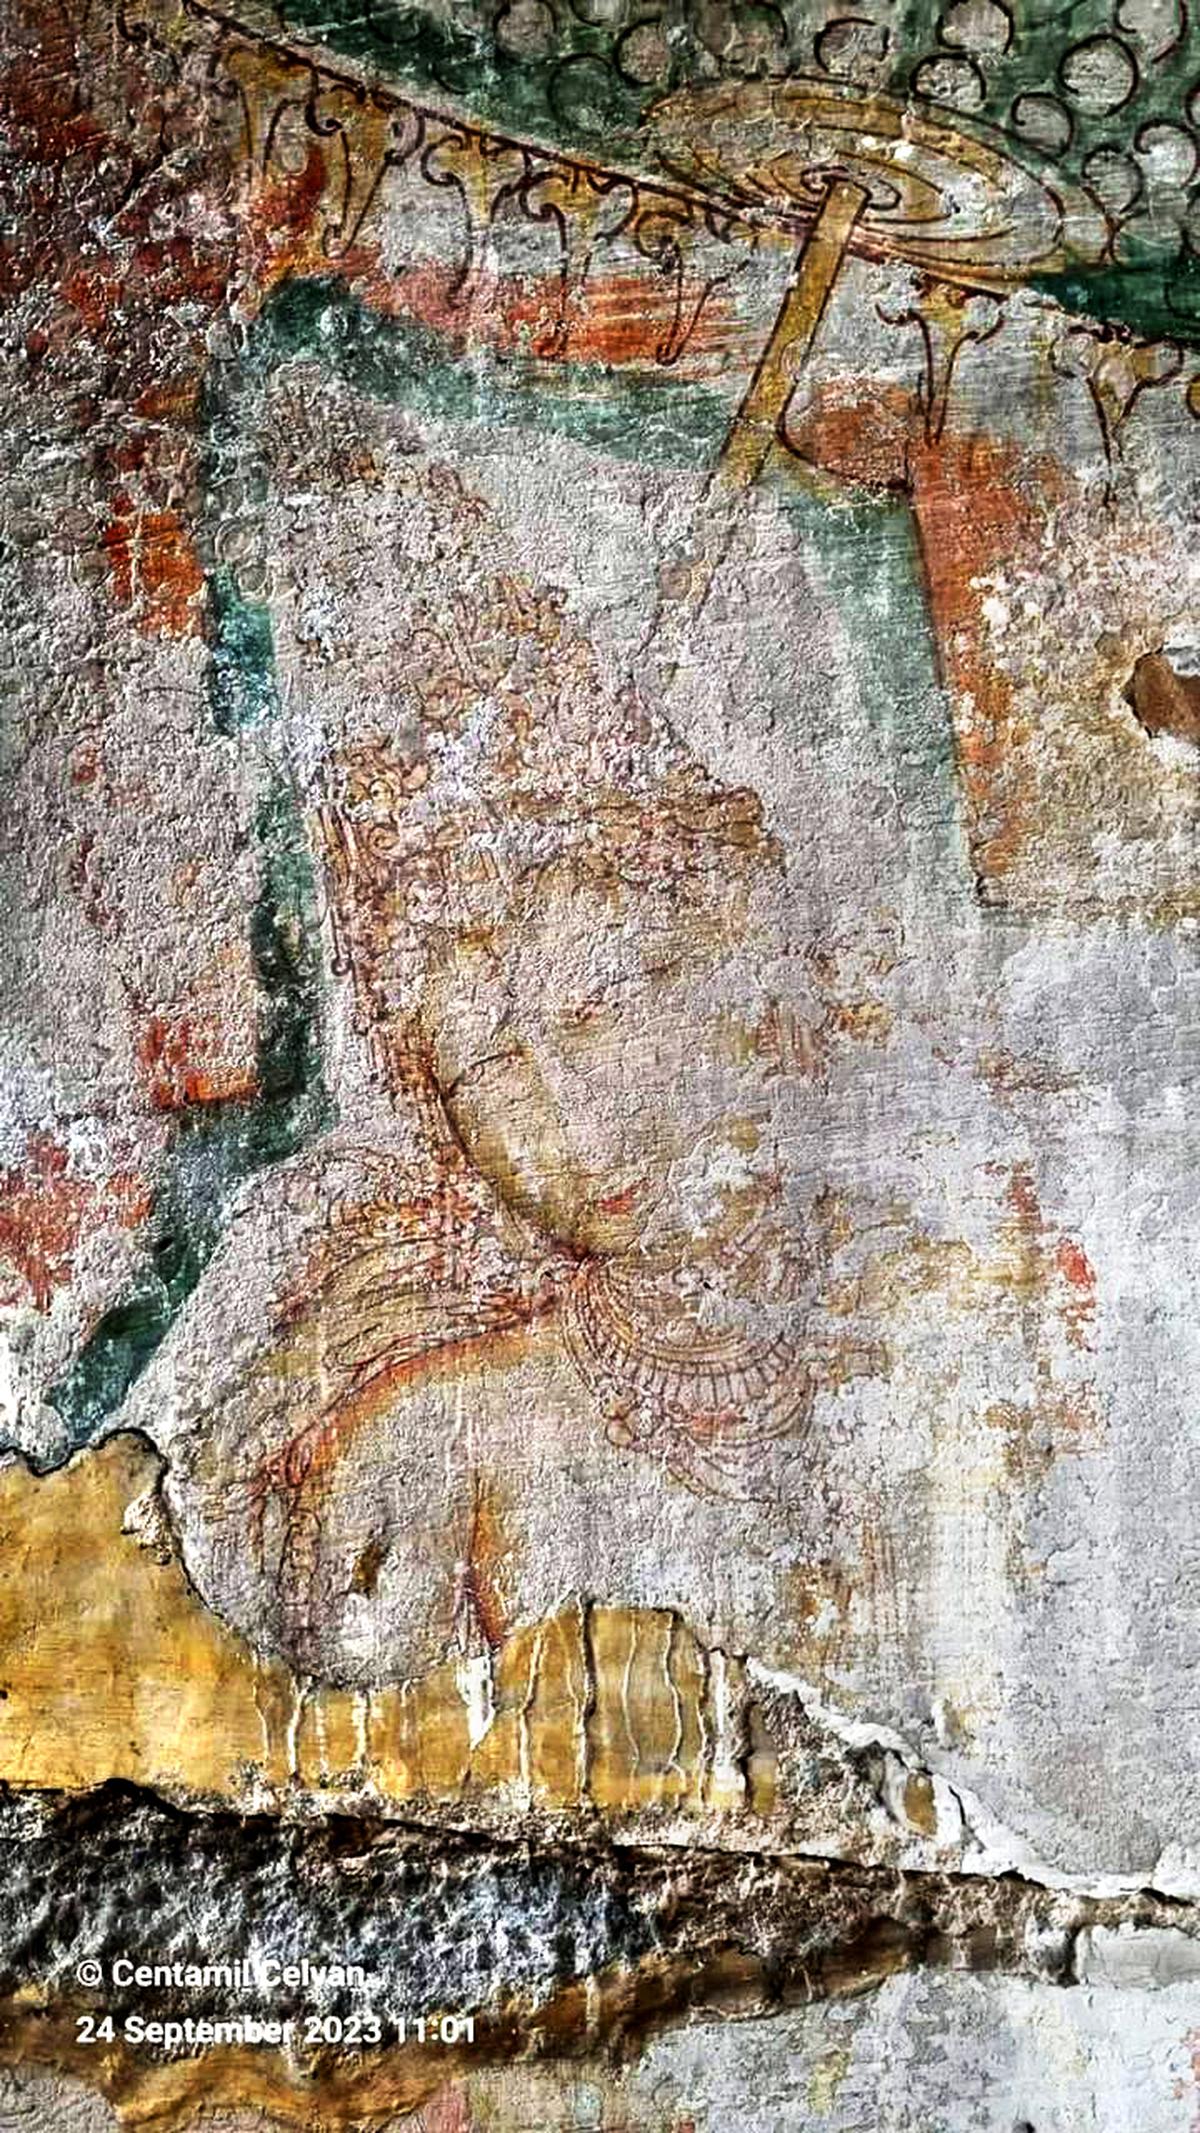 Art & Culture | Painitngs | Panamalai paintings from Tamil Nadu | UPSC | 1,300-year-old Pallava paintings in ruins at Tamil Nadu's Panamalai 